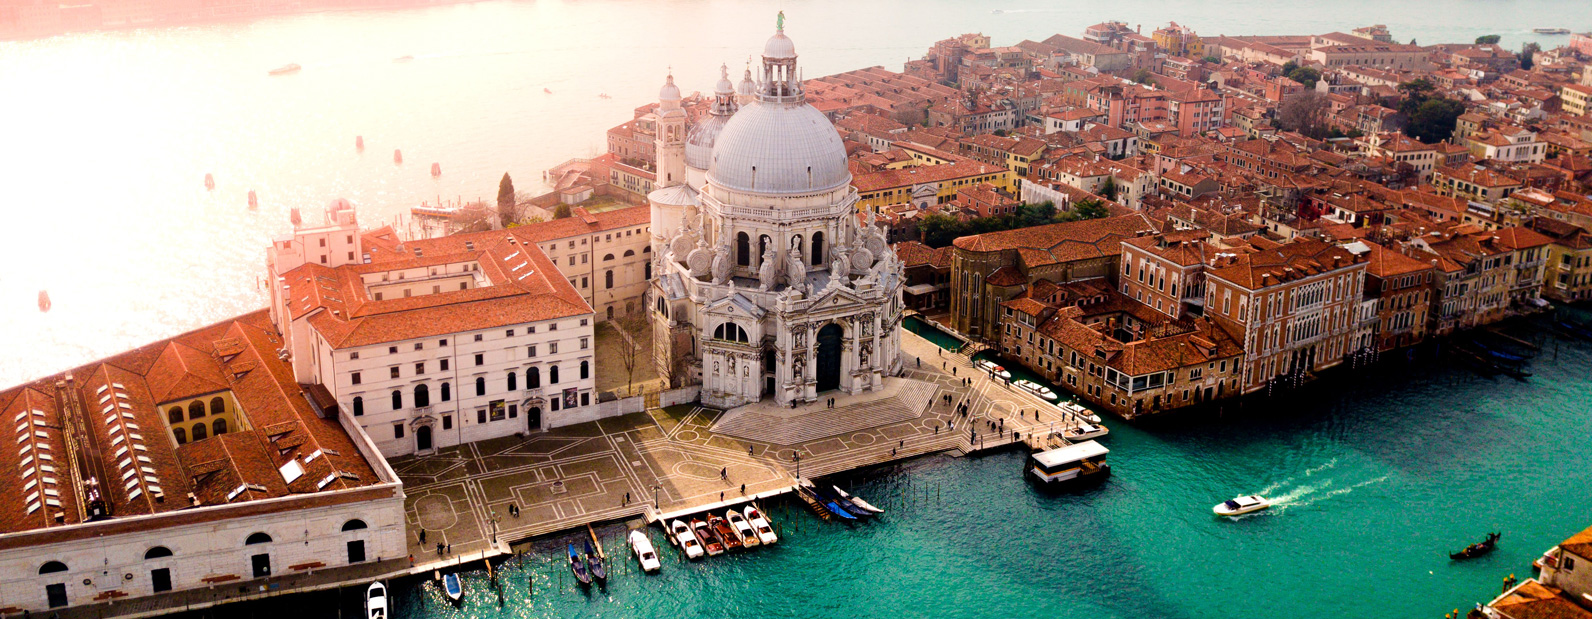 ונציה איטליה